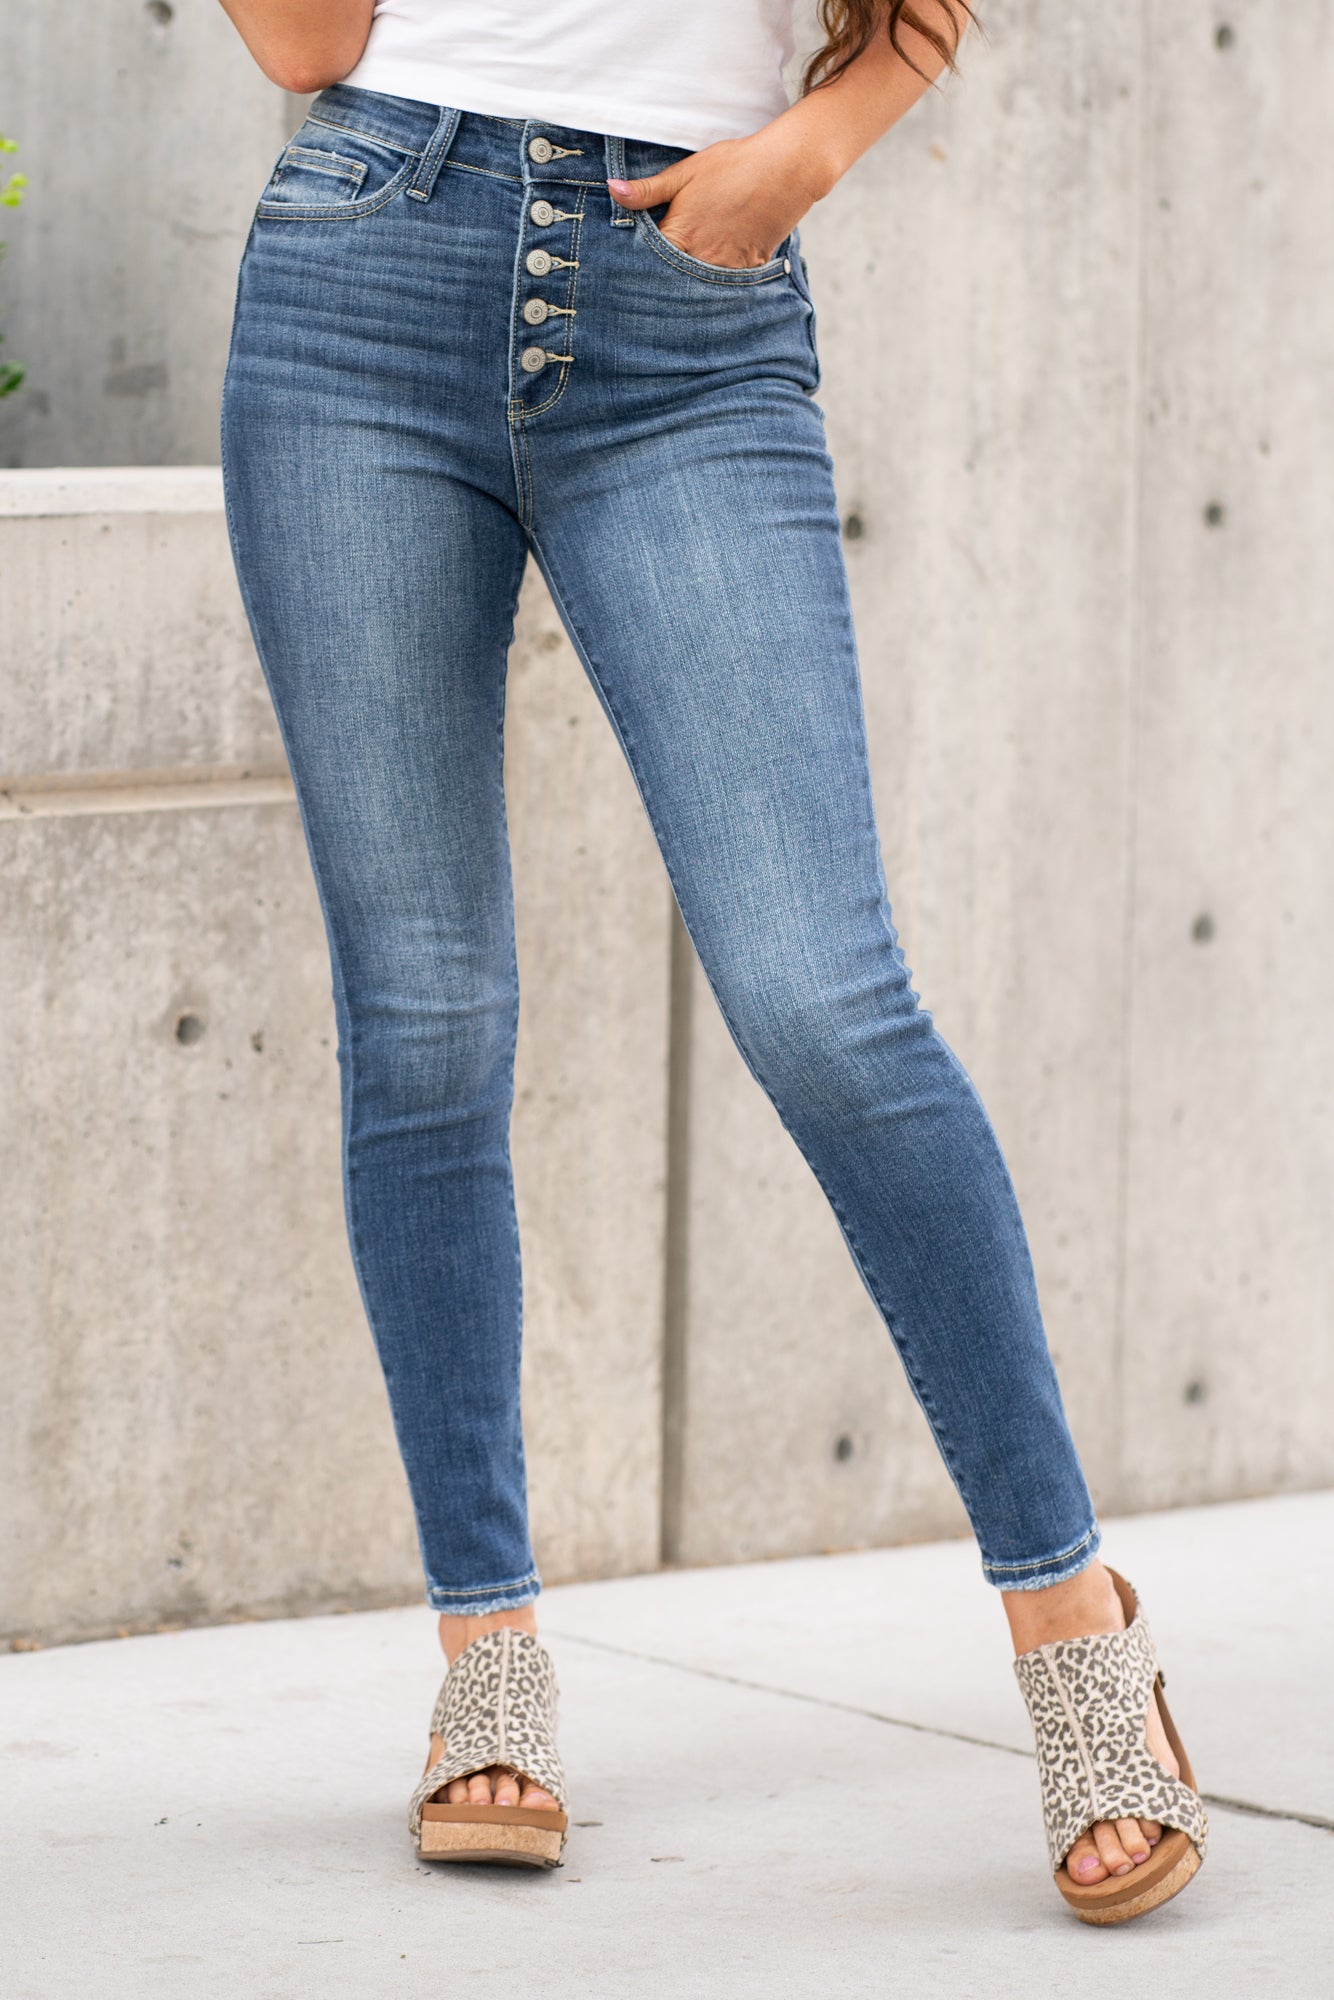 Judy Blue Jeans Loveland Mid Rise Tummy Control Top Skinny Medium